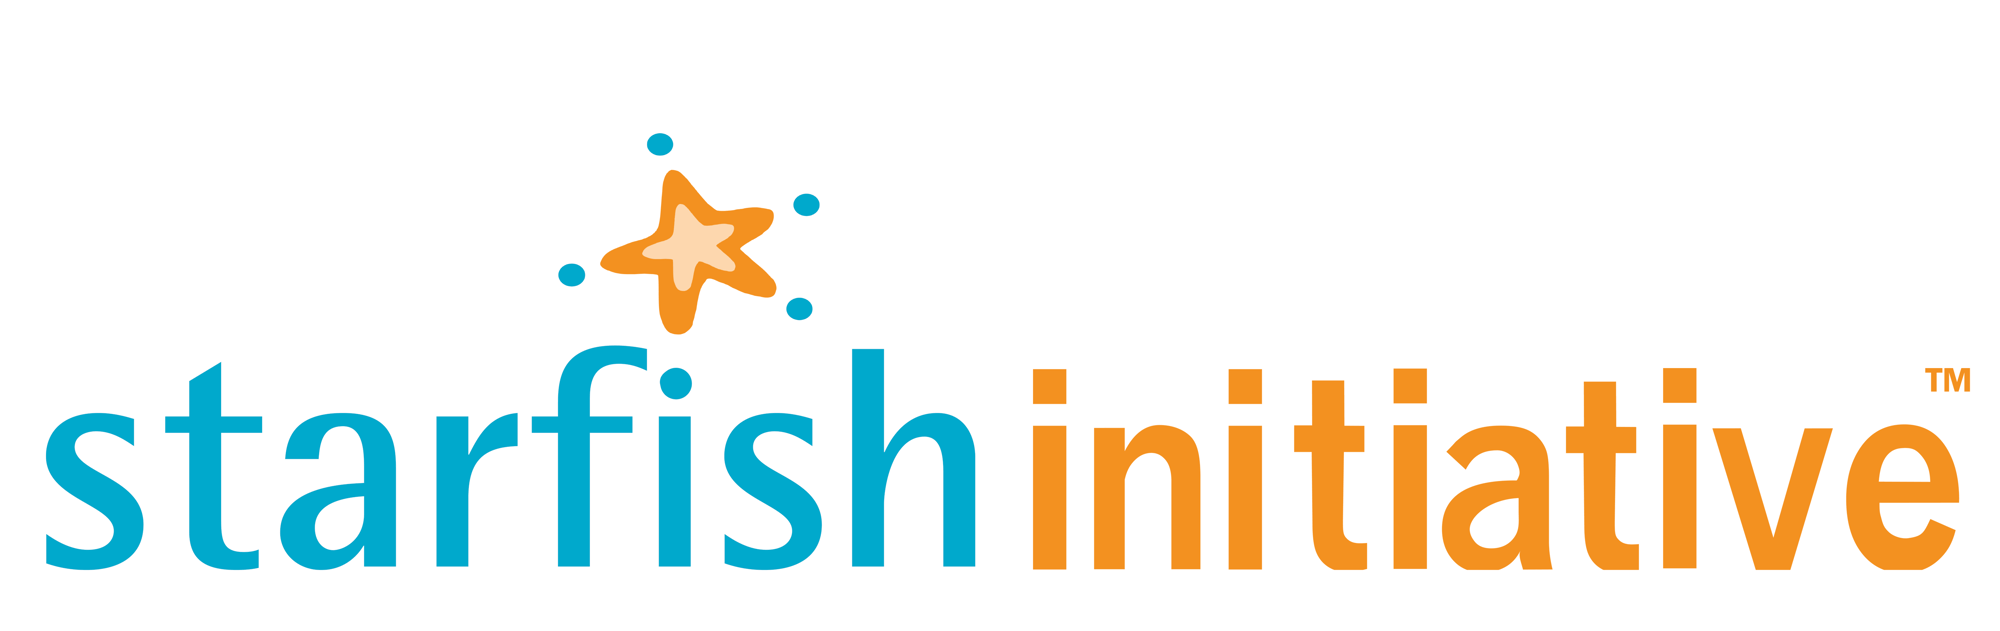 Starfish Initiative Logo